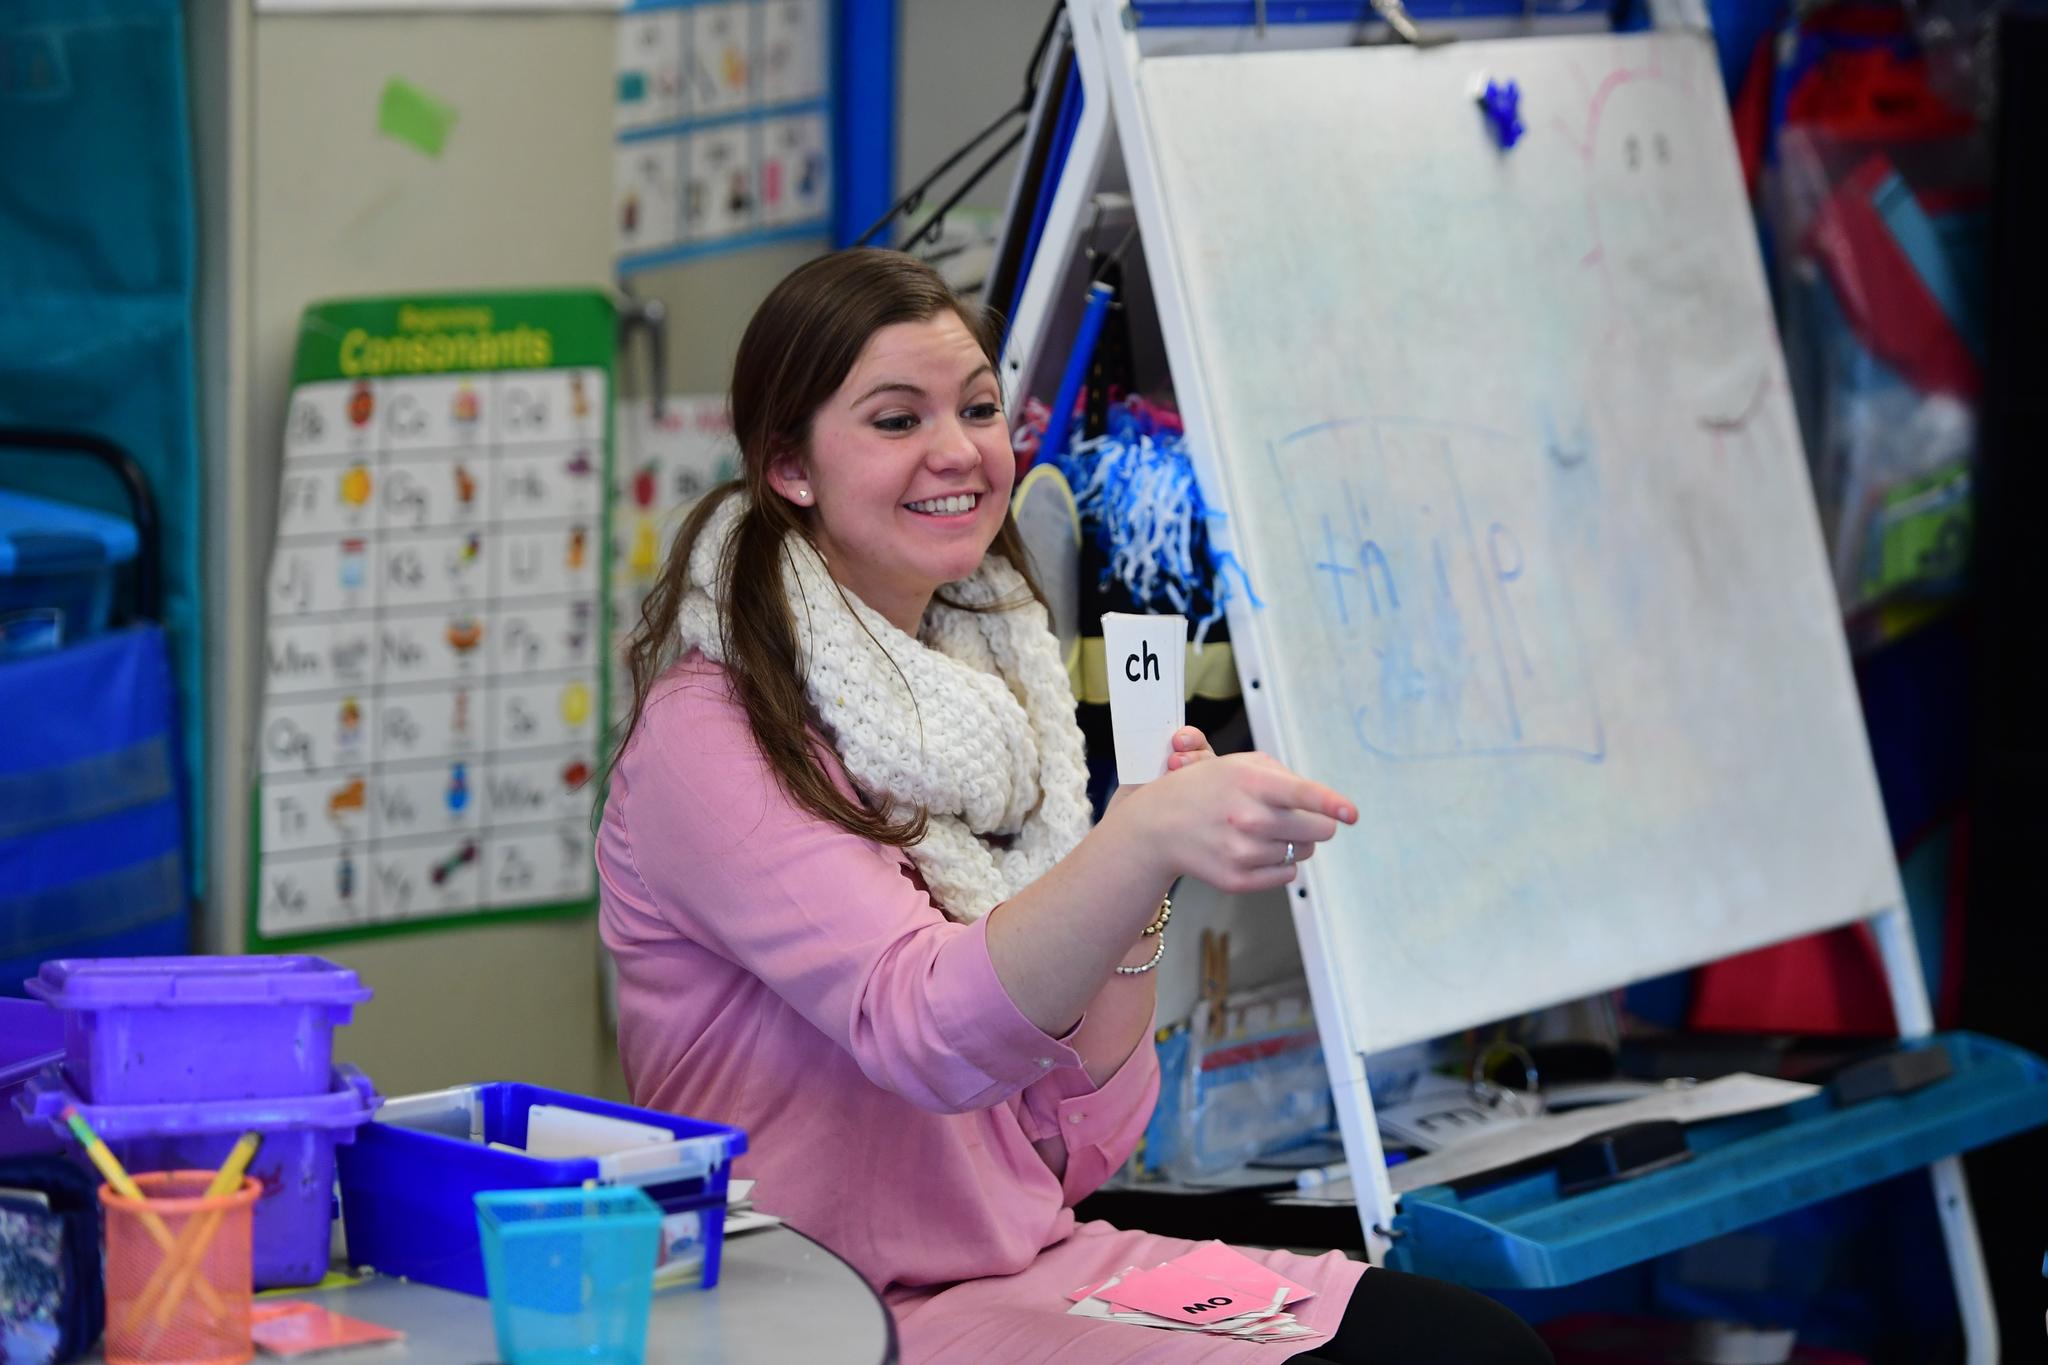 Rebekah Williams, a 2019 Cedarville University graduate, student teaches at an elementary school